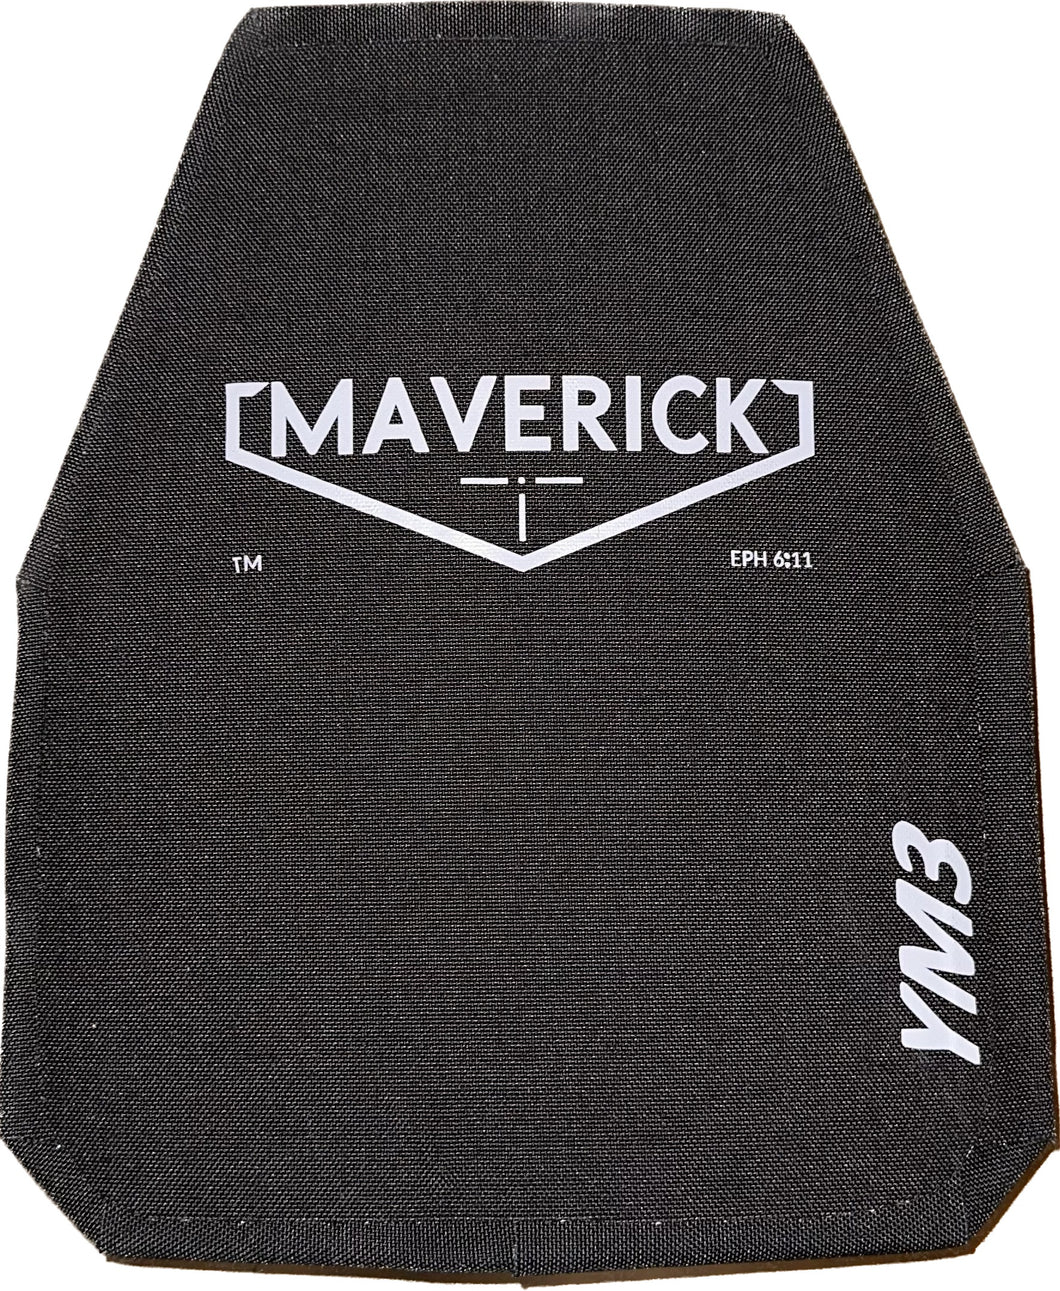 Maverick Tactical Level 3+ Certified Body Armor Plate